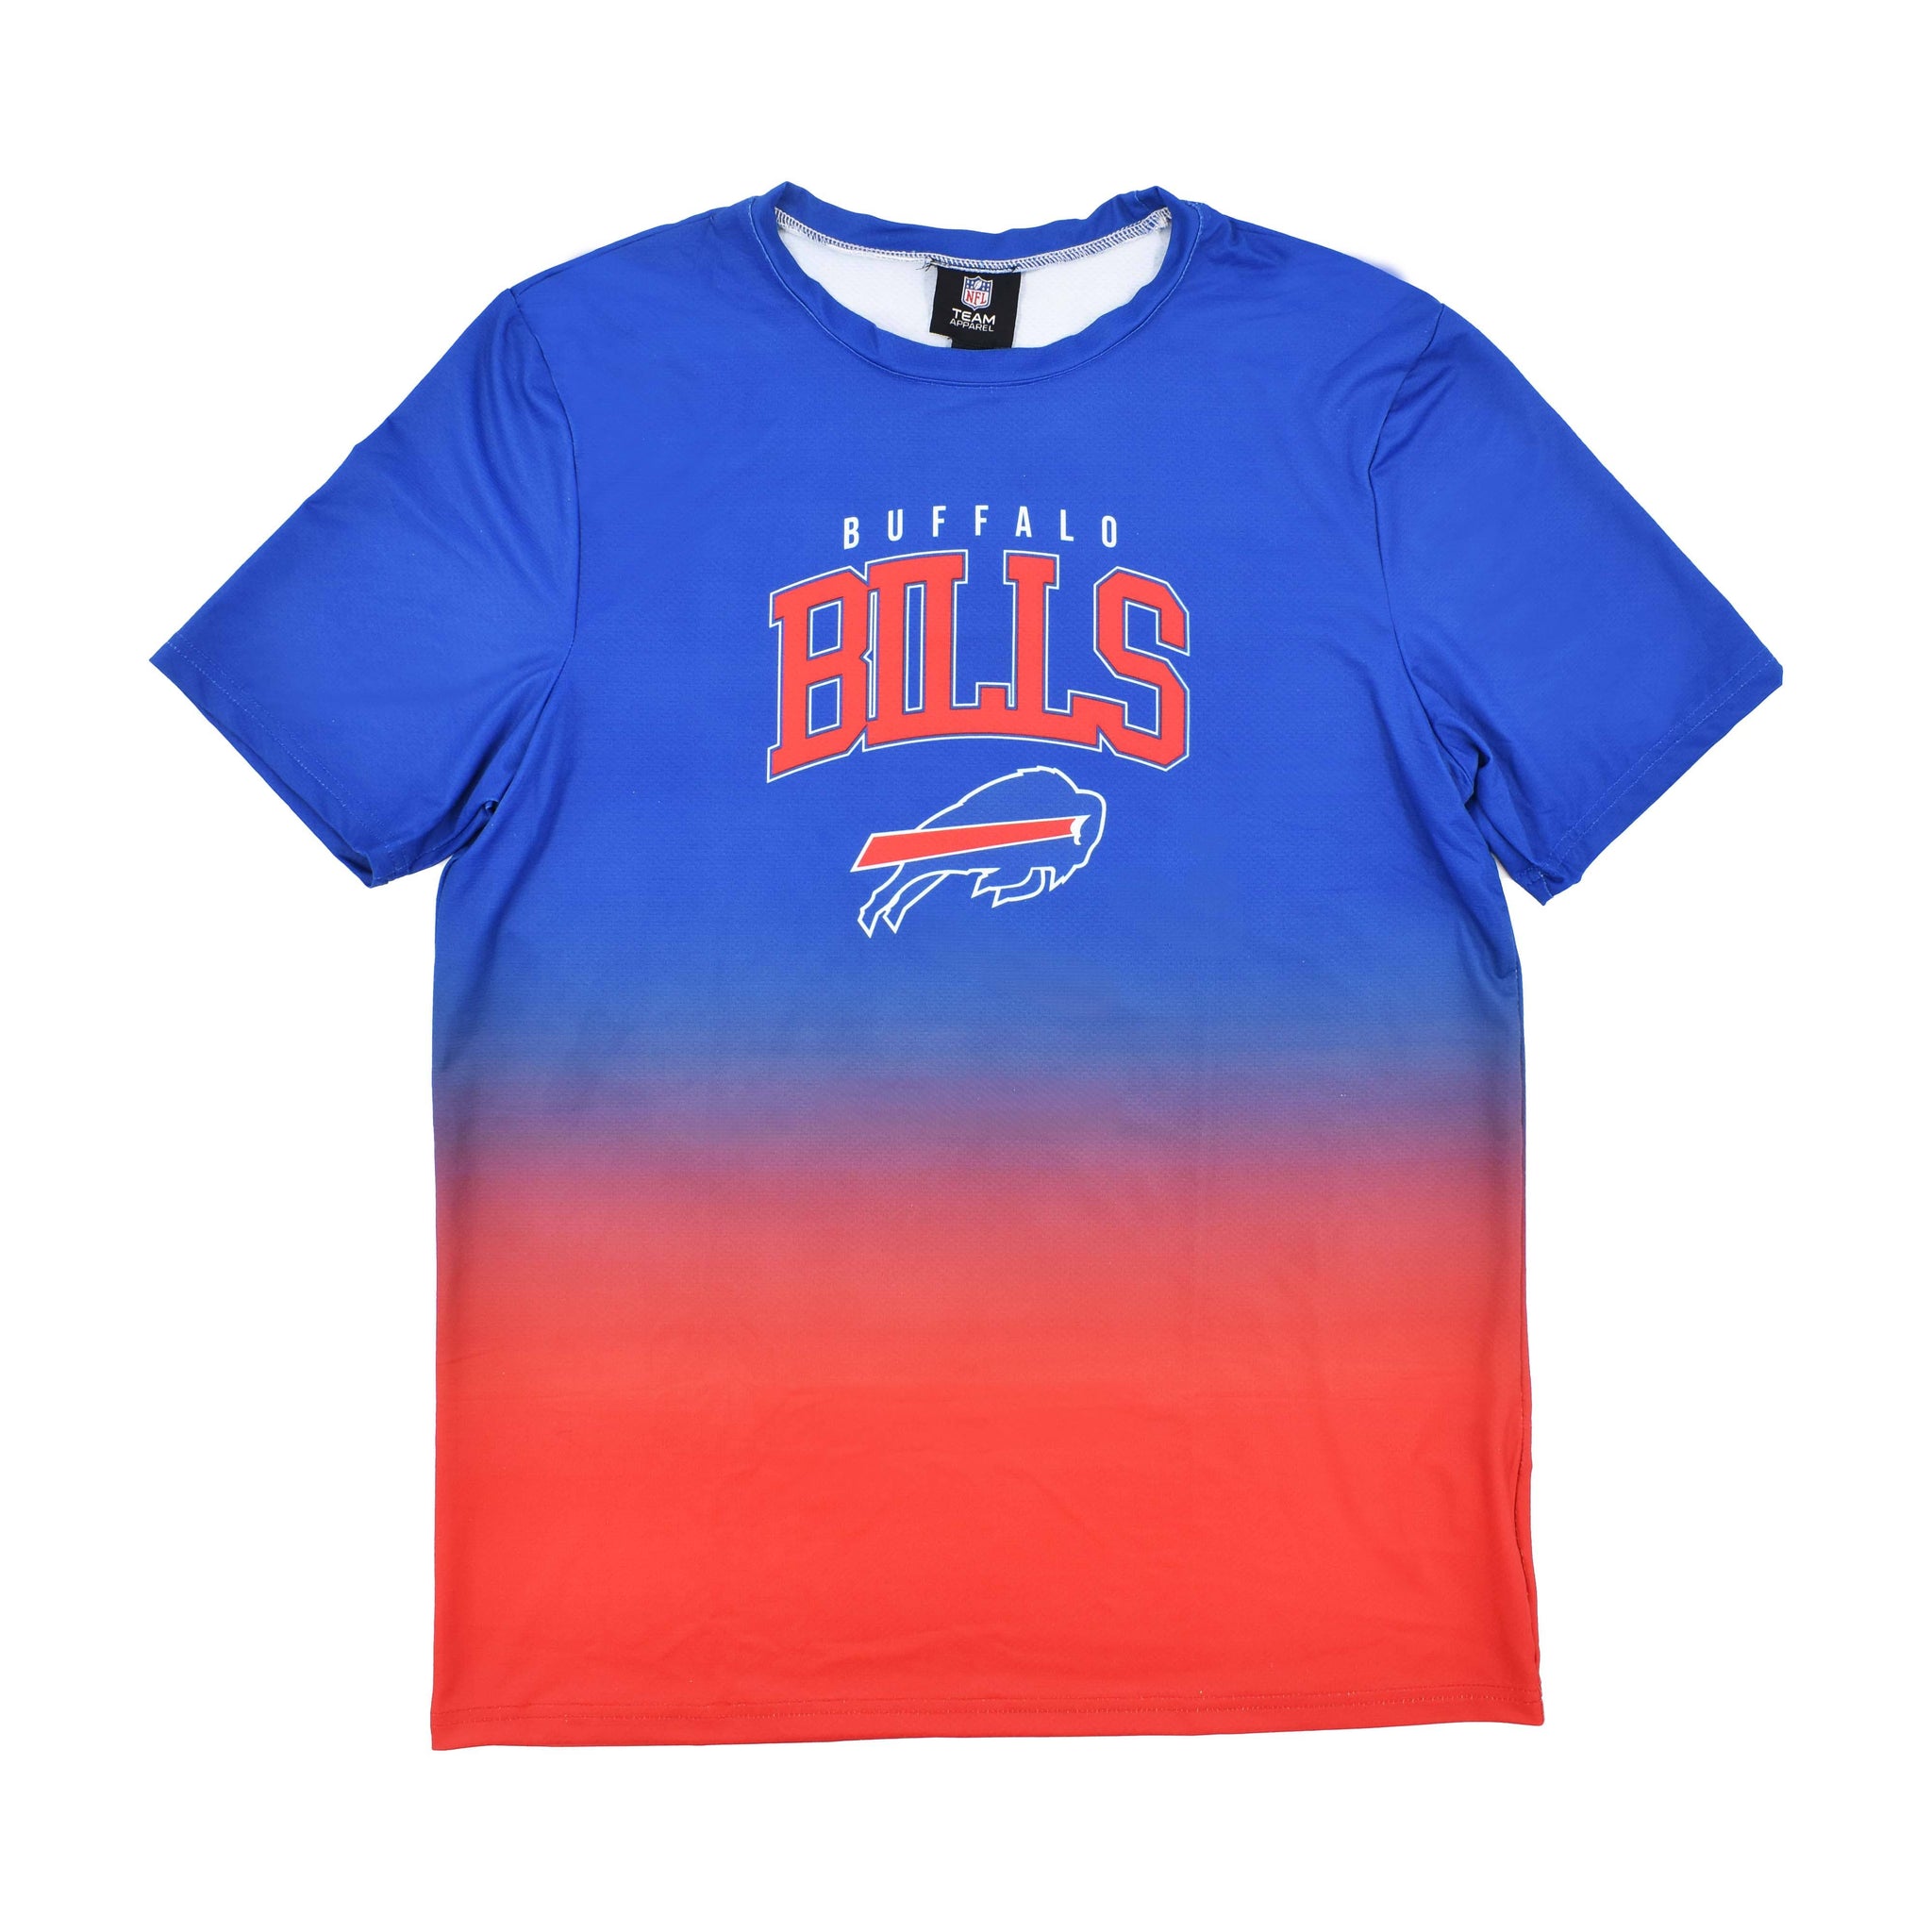 Buffalo Bills red and royal blue gradient swim shirt